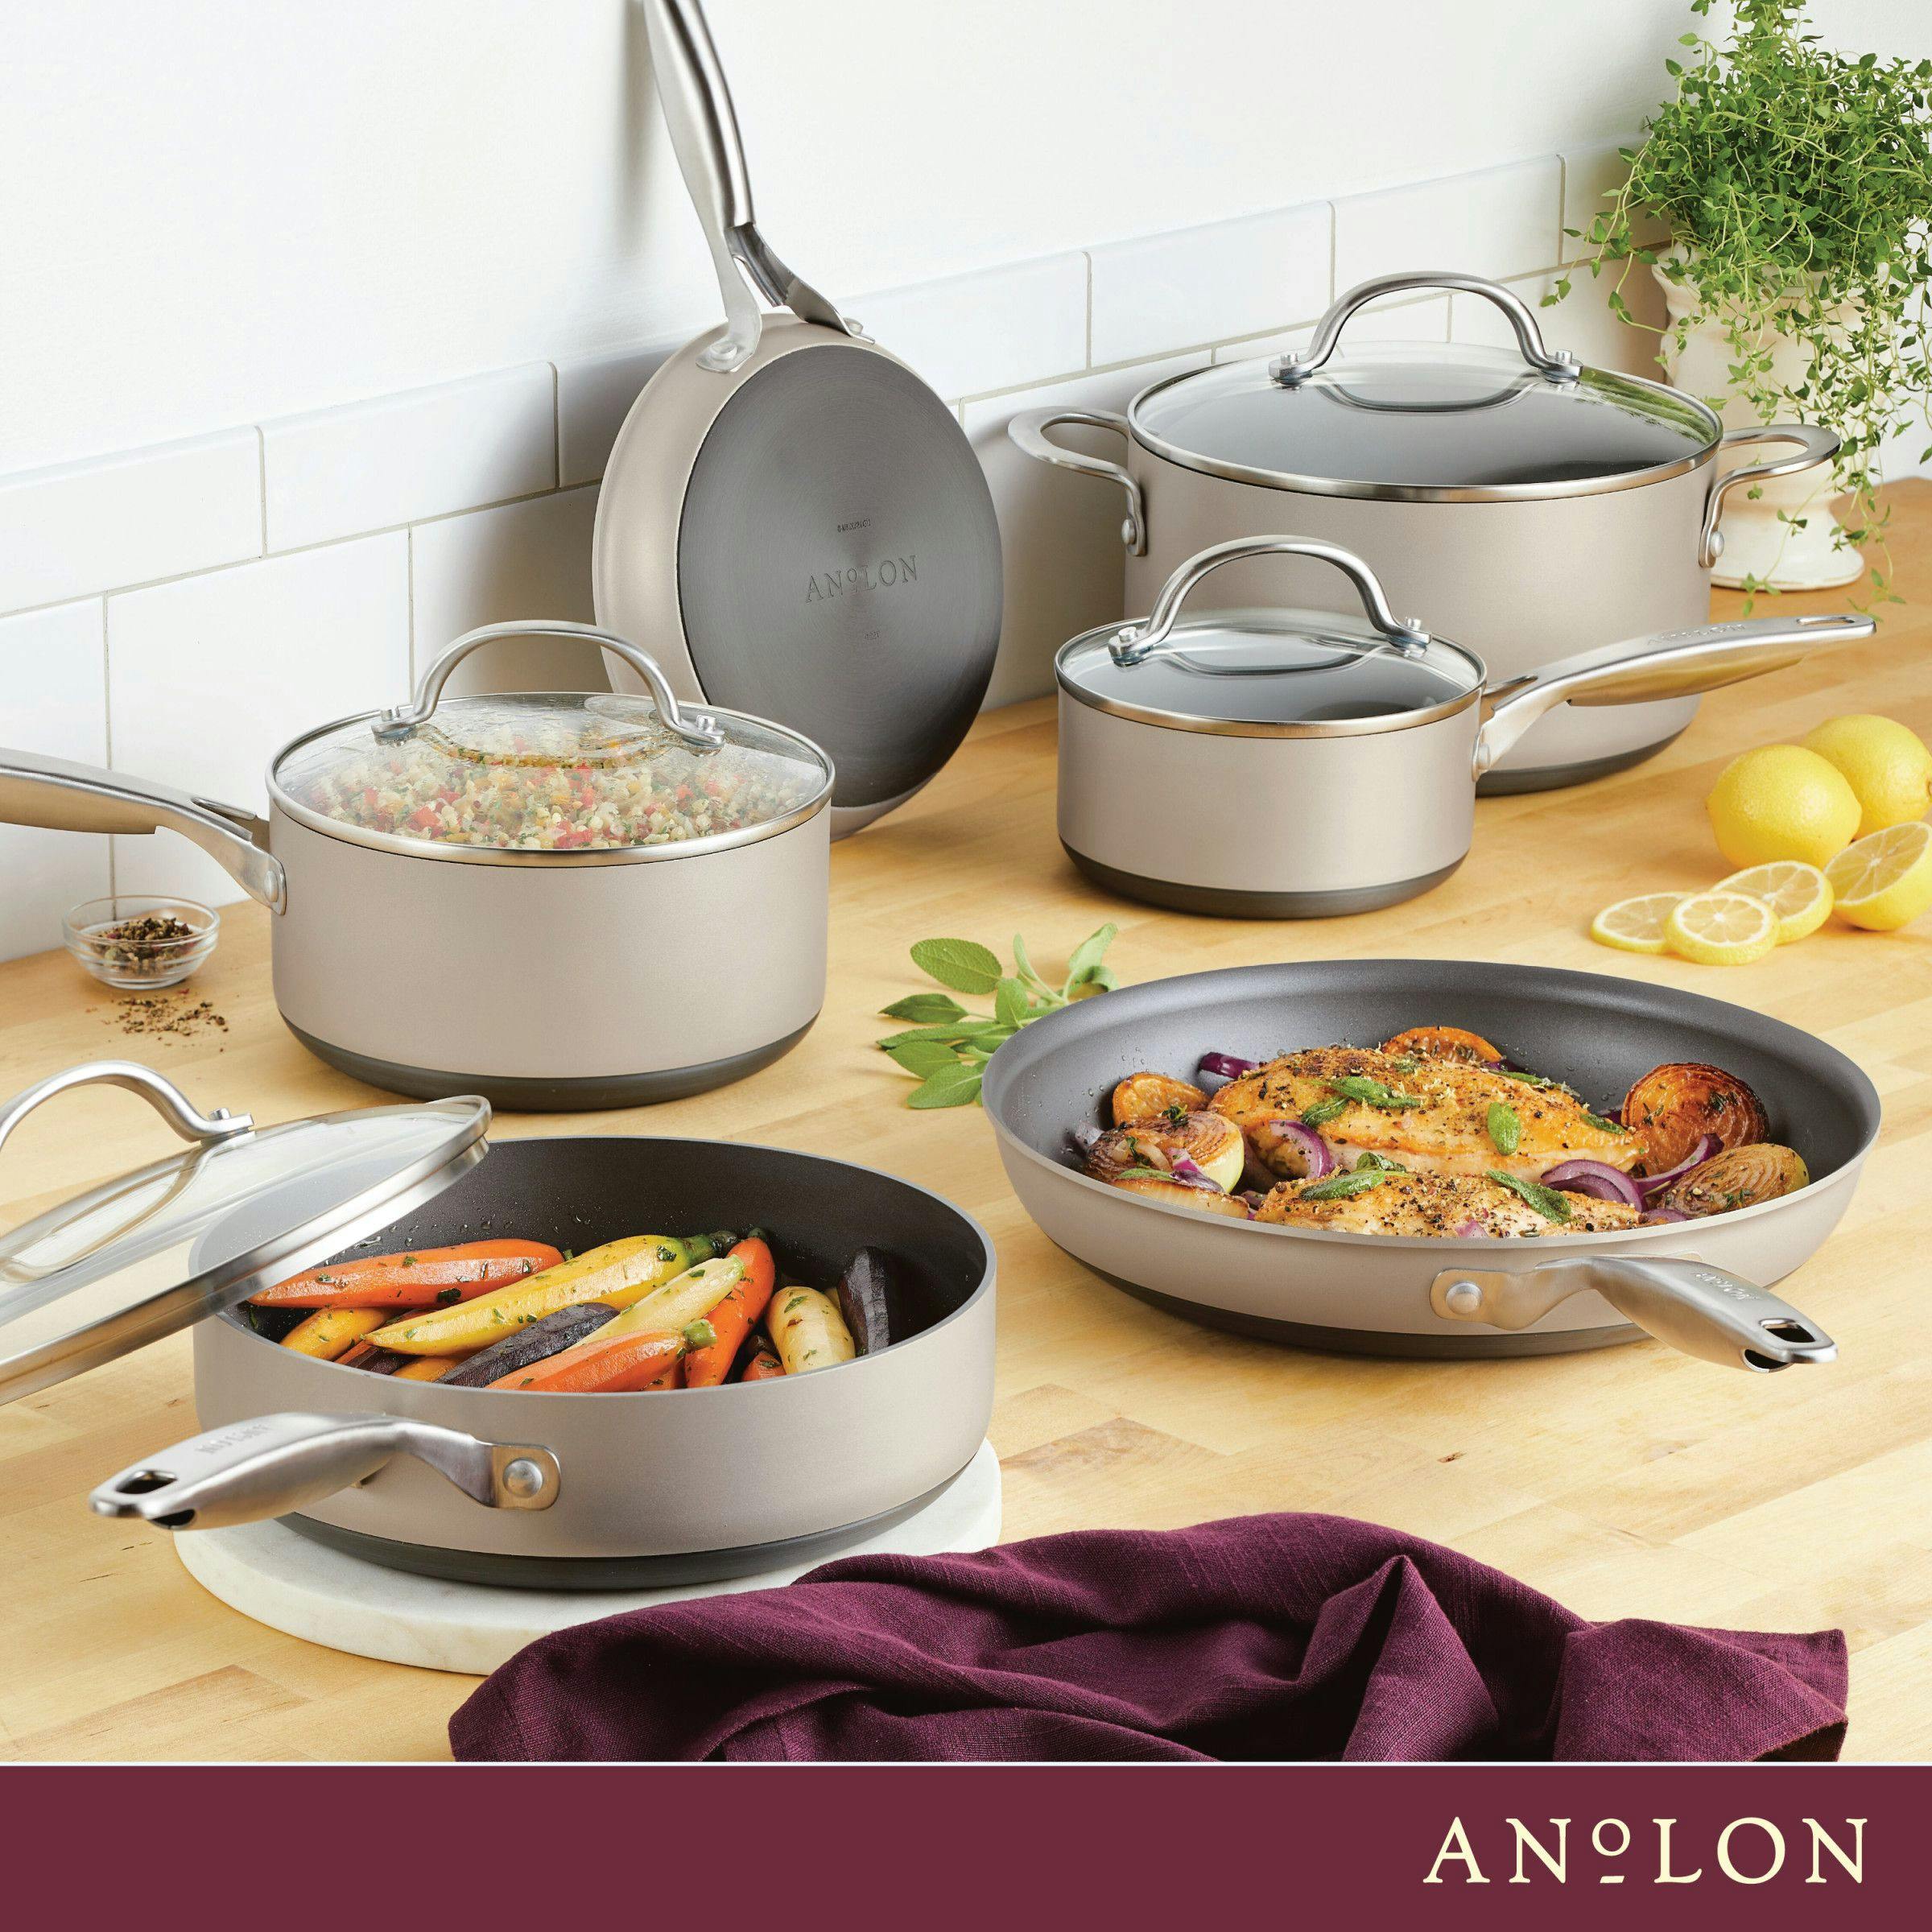  Anolon Advanced Hard Anodized Nonstick Cookware Pots